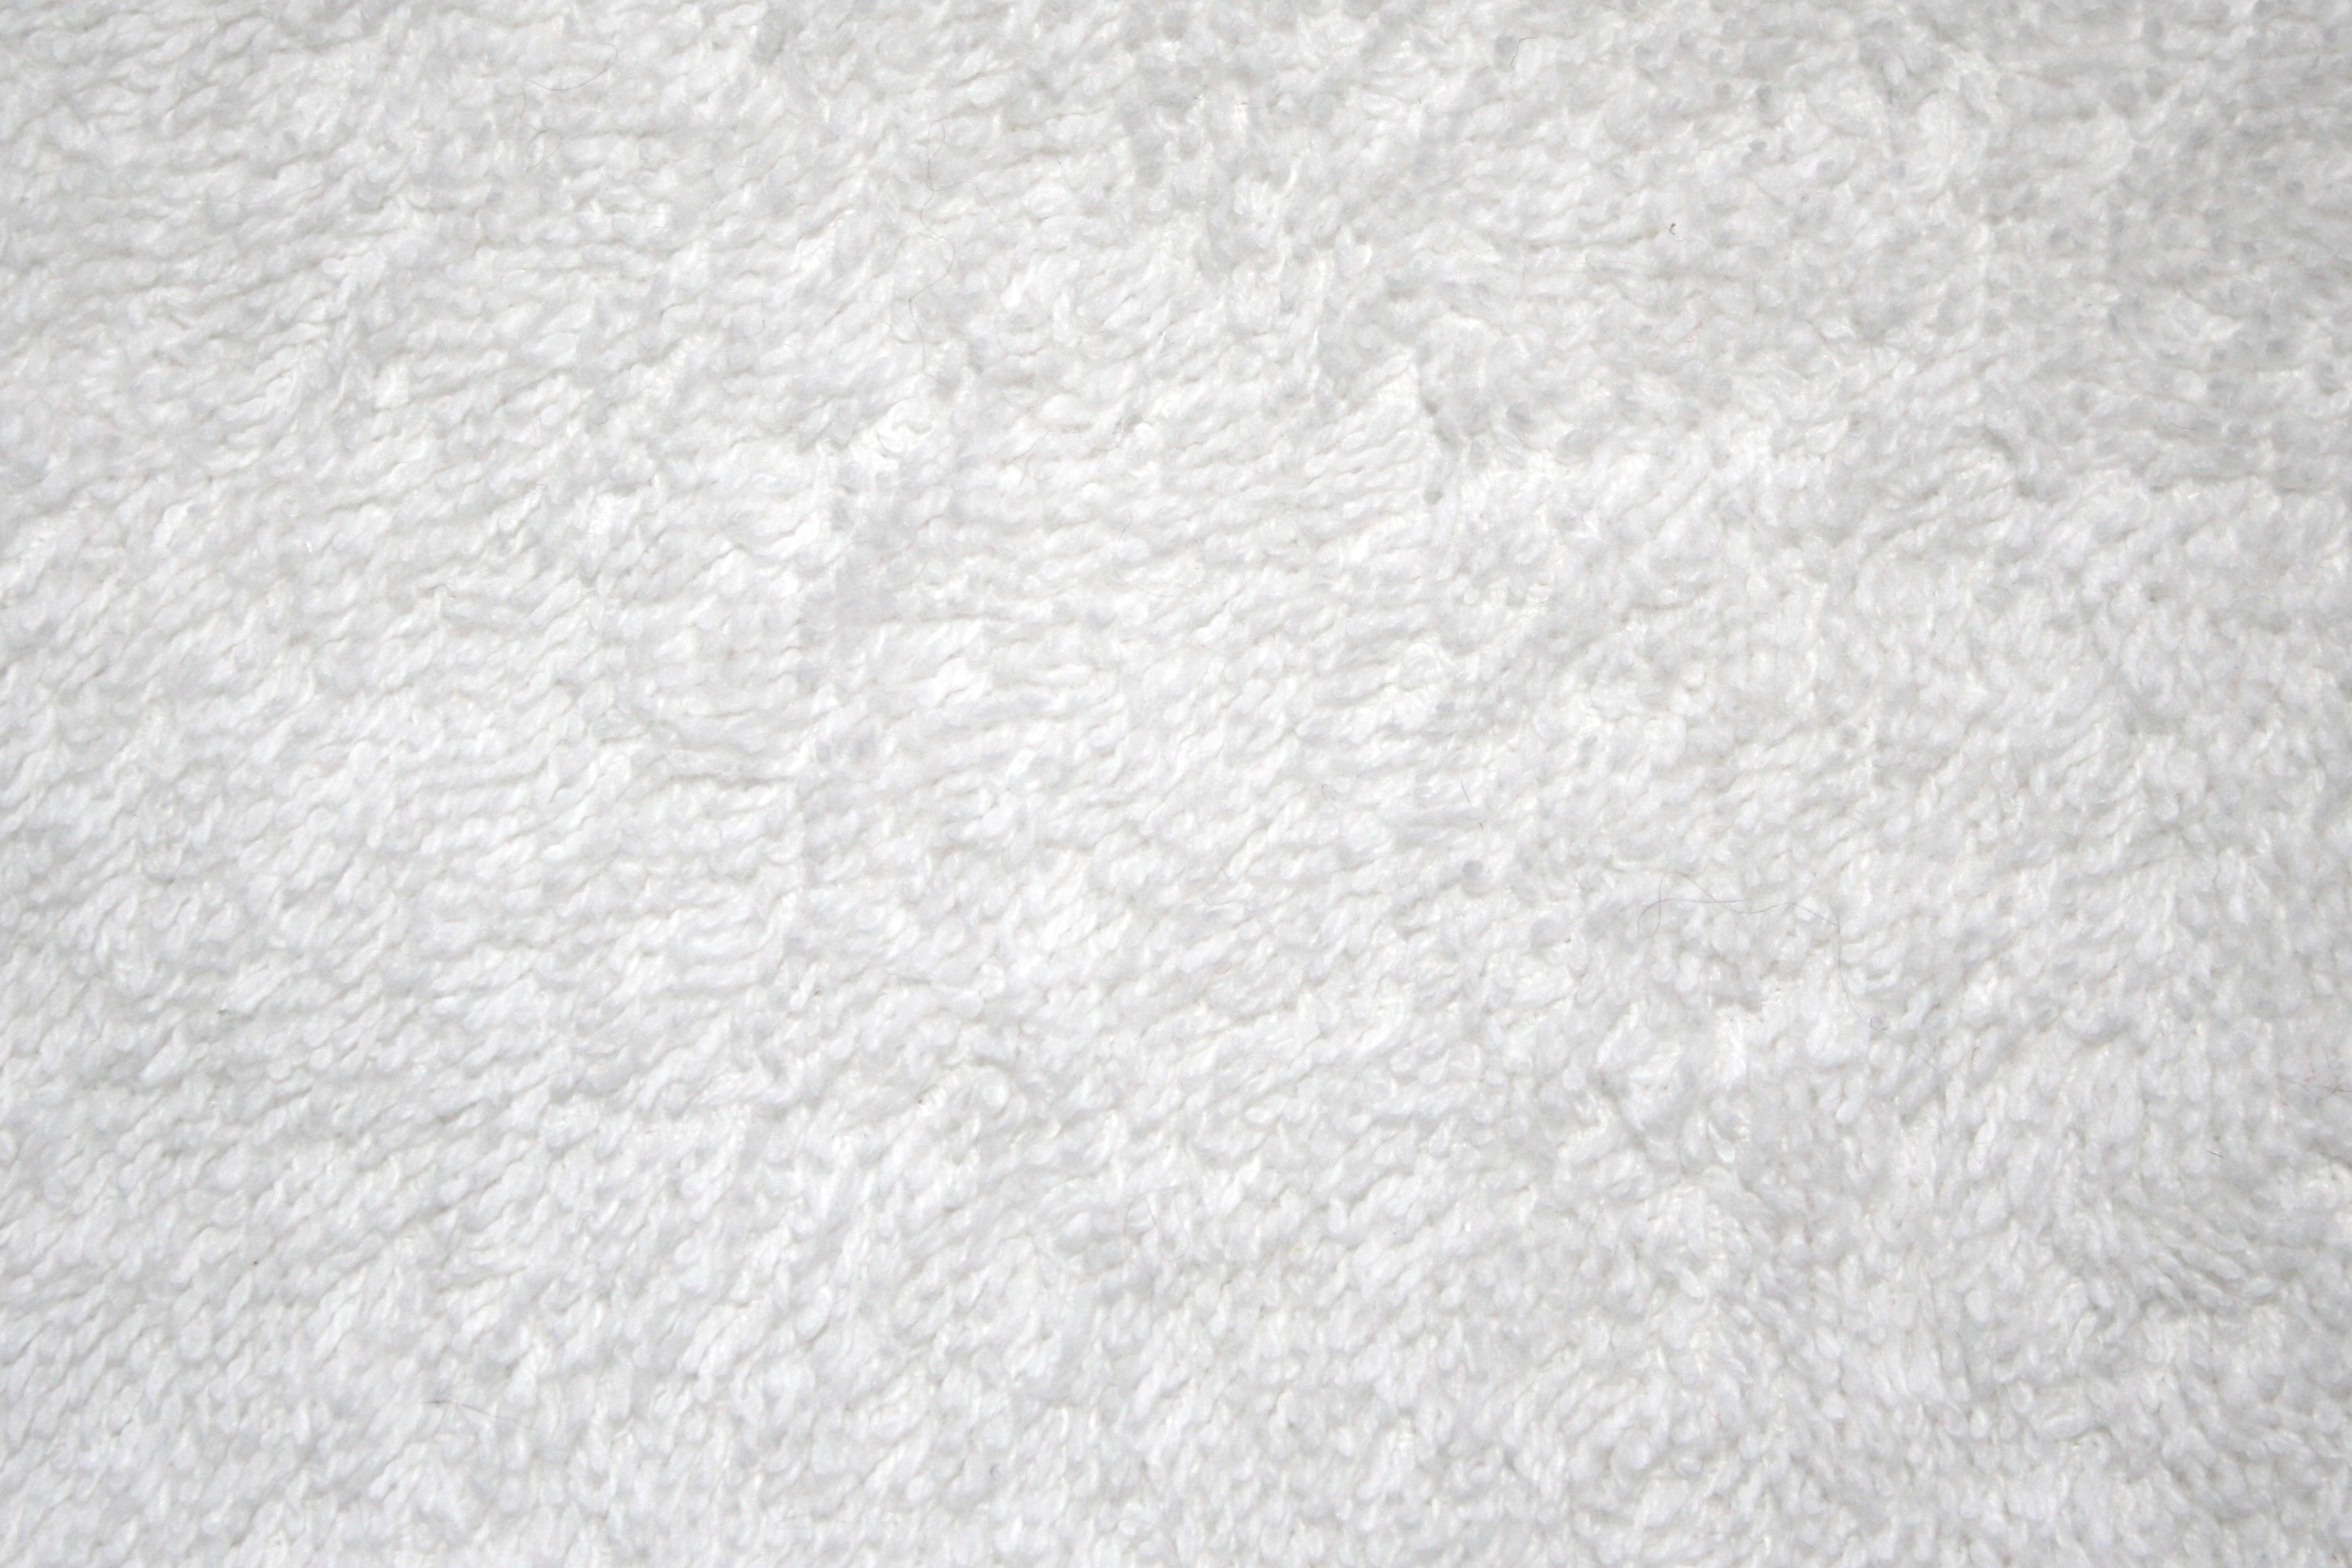 White Terry Cloth Closeup Texture Picture Free Photograph Photos